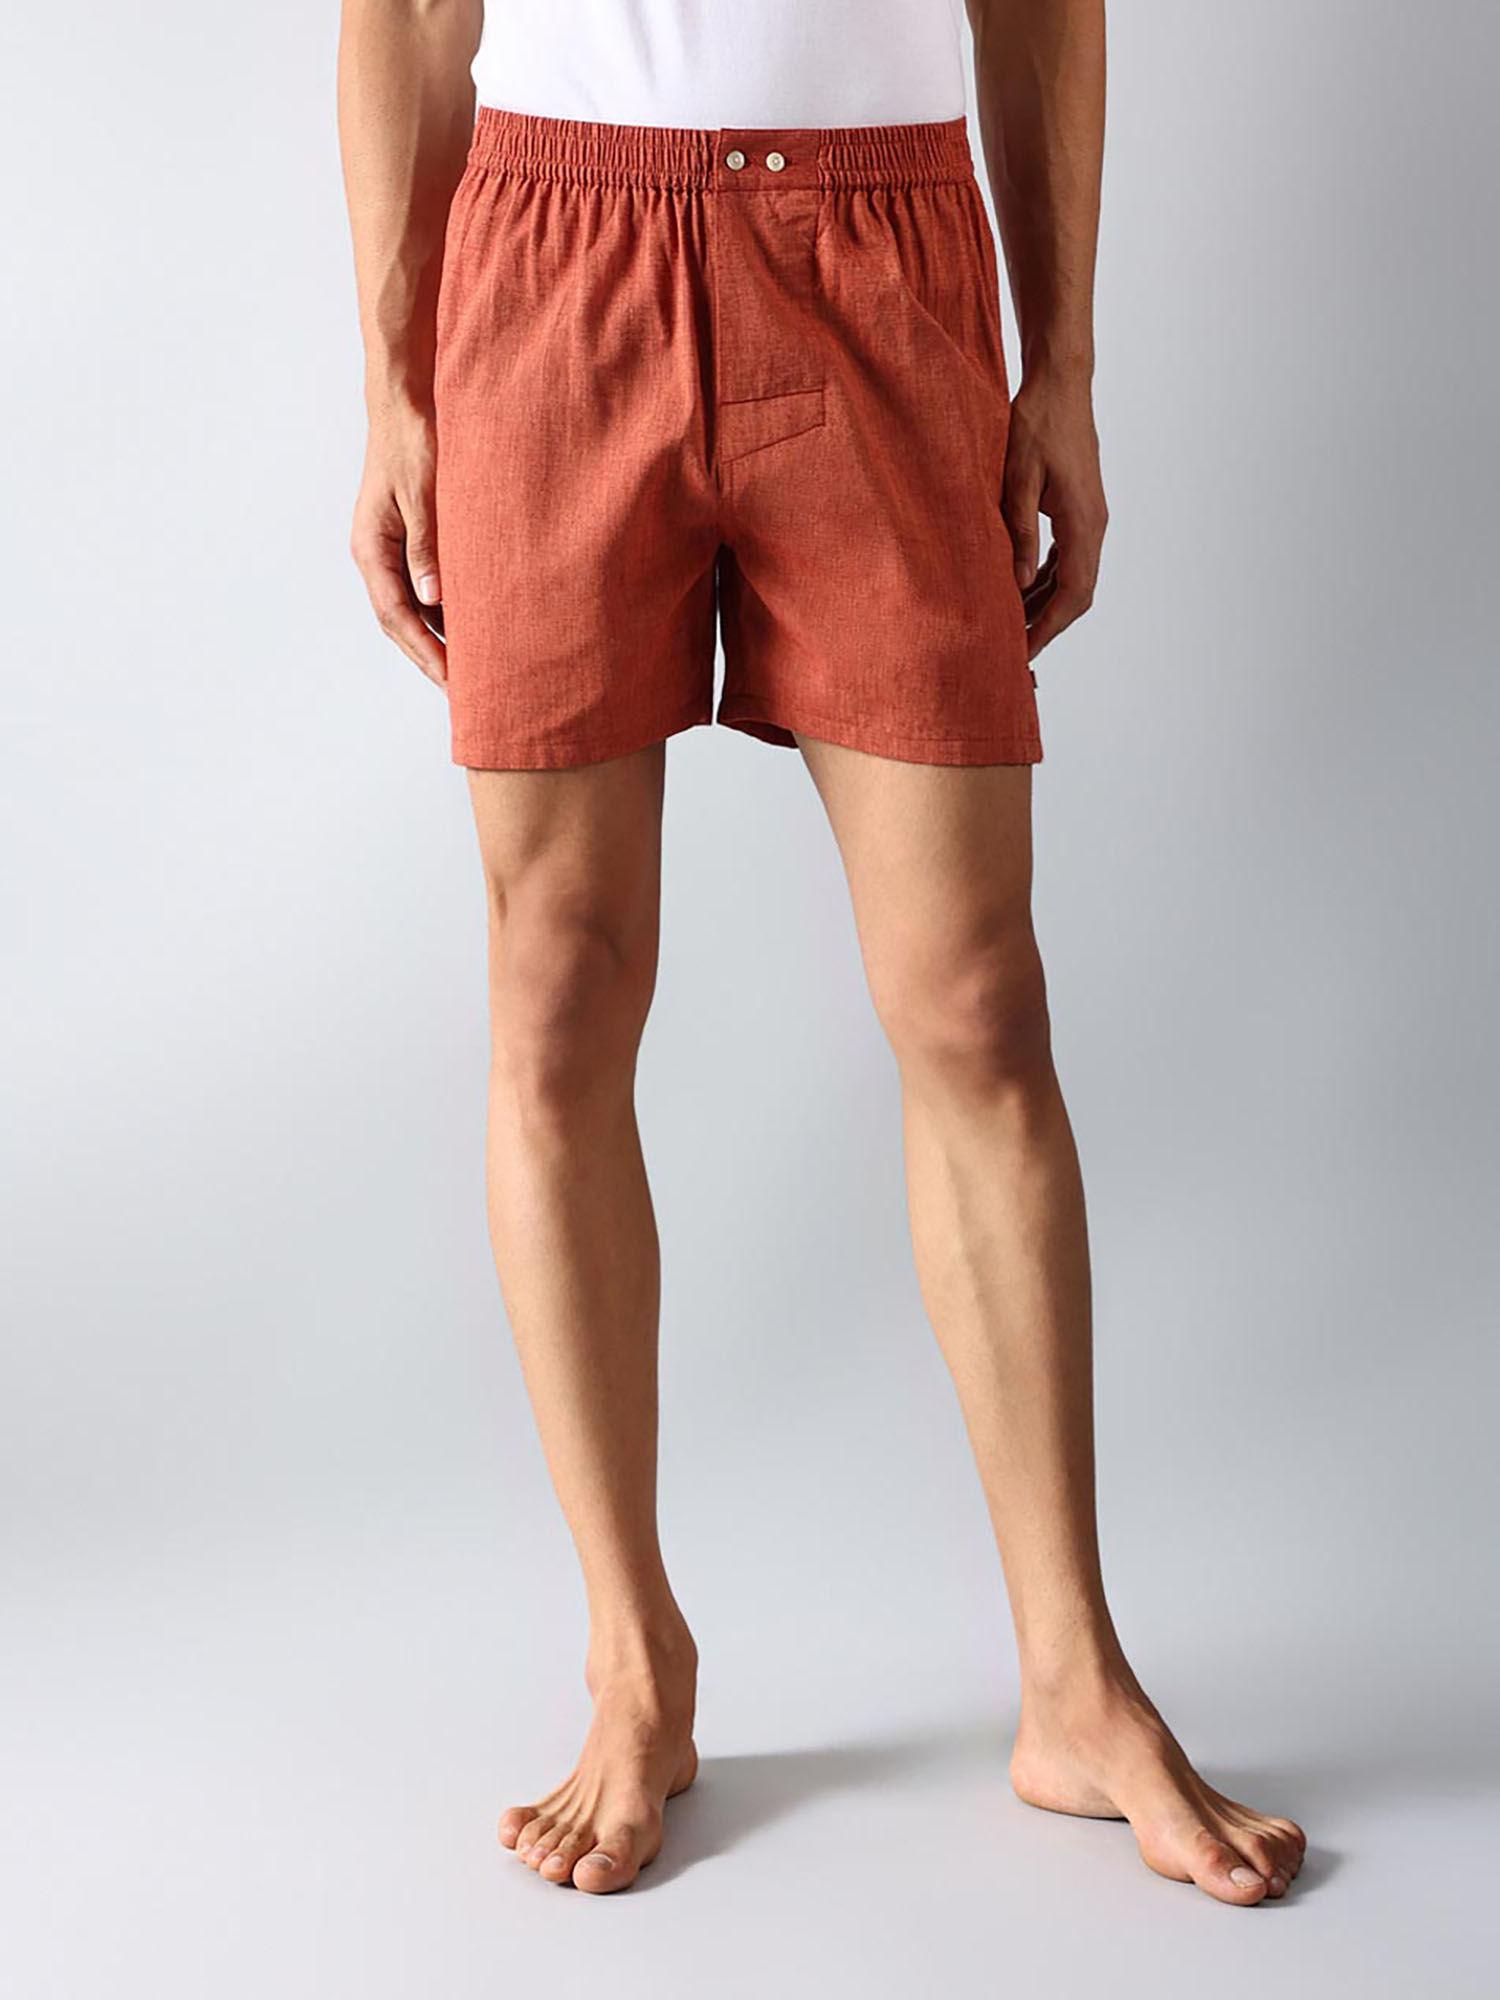 orange-cotton-boxer-shorts